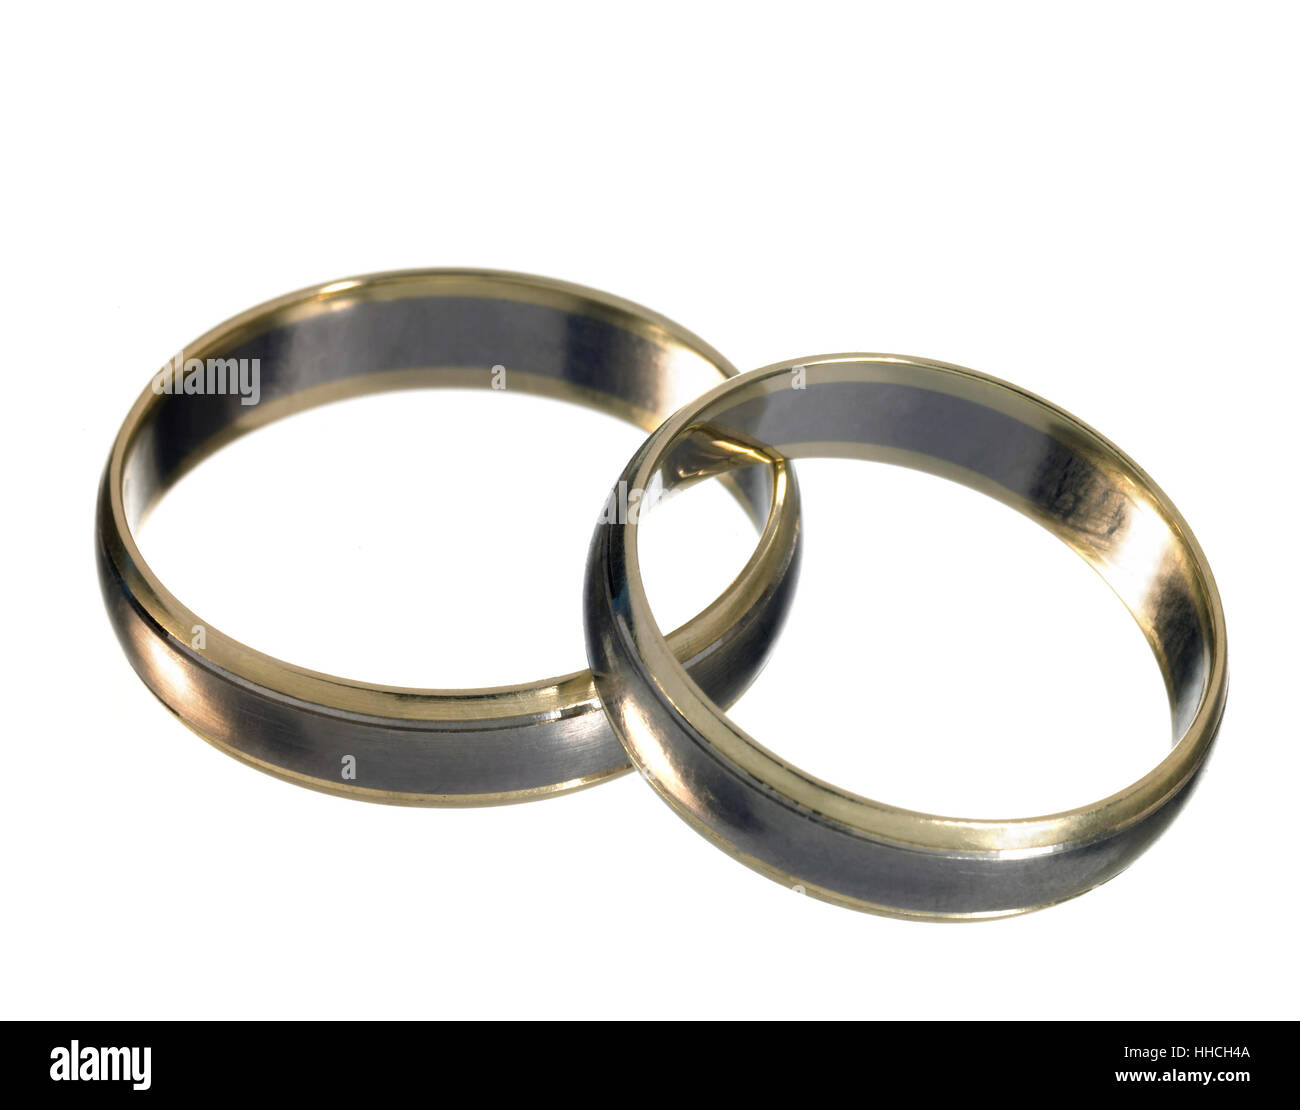 studio photography of two shiny metallic wedding rings on each other, isolated on white Stock Photo